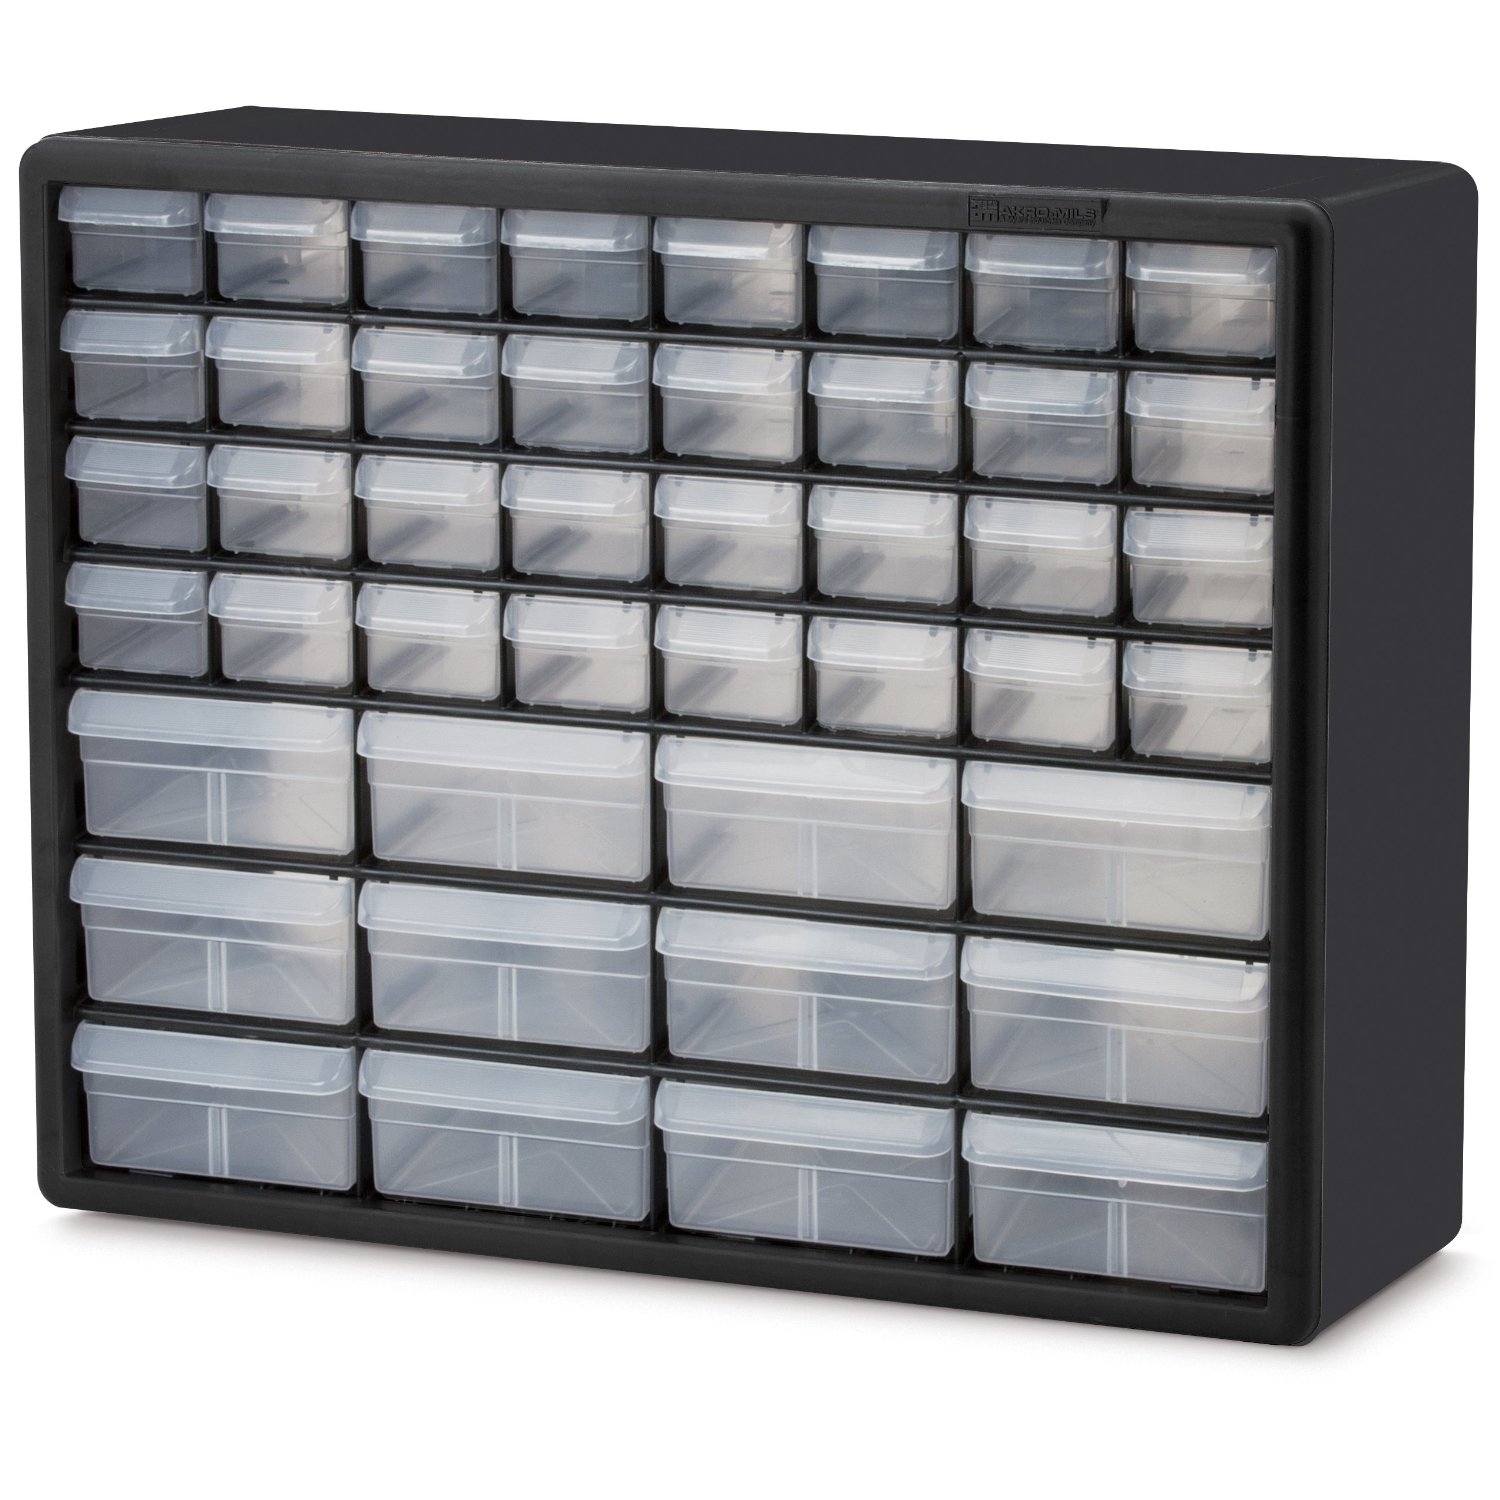 Hardware Craft Fishing Garage Storage Cabinet in Black with